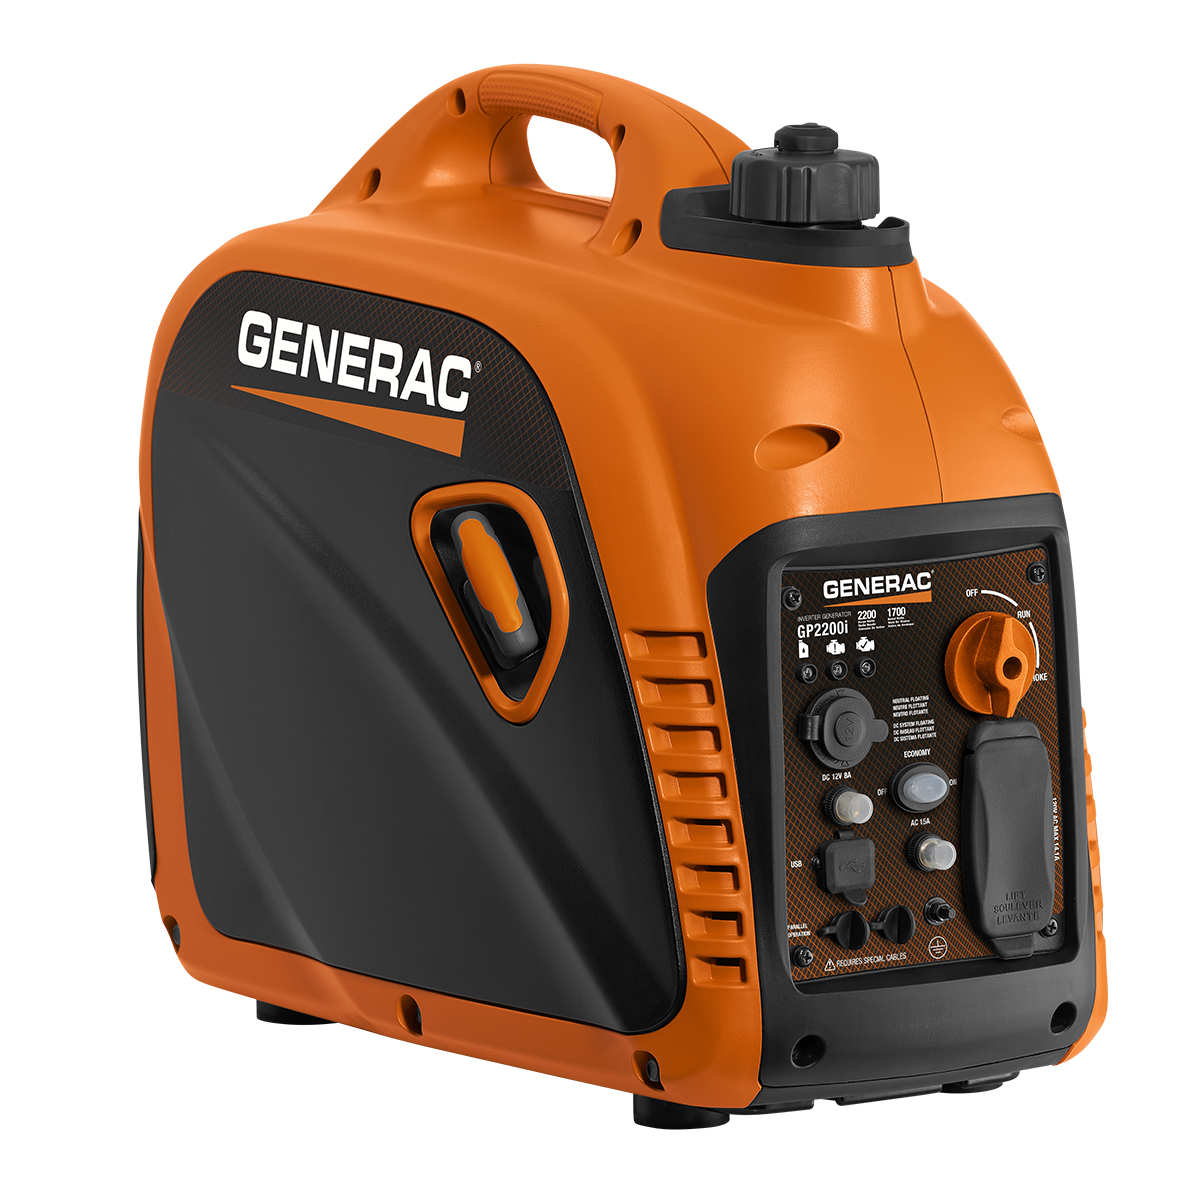 4. Generac 7117 Gp2200I 2200 Watt Portable Inverter Generator